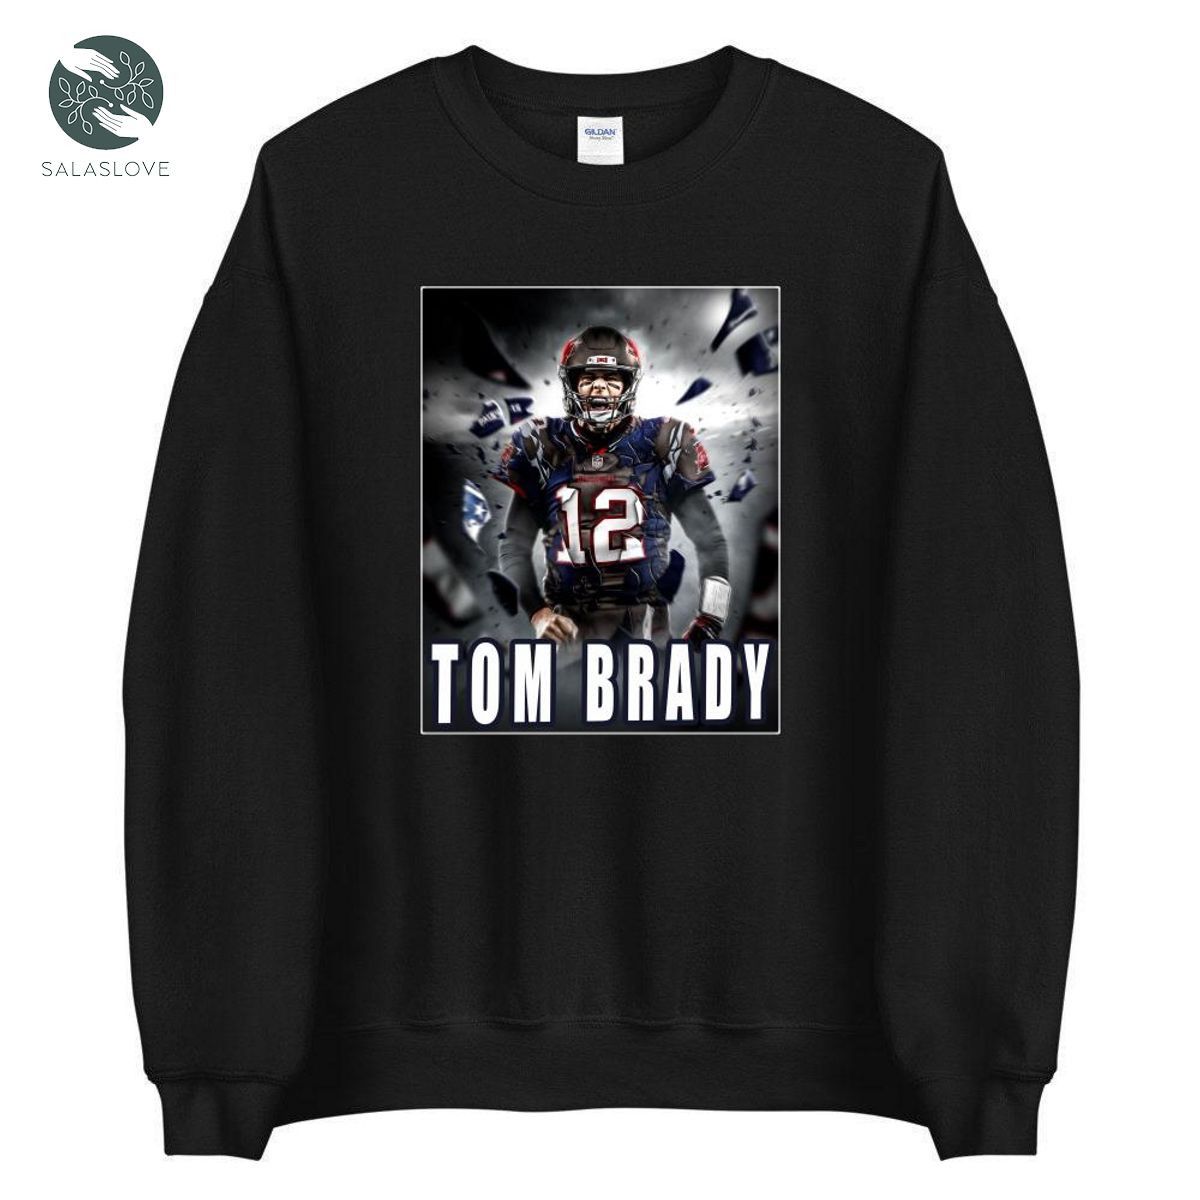 Tom Brady Retro 90s Bootleg Shirt for Football Fan